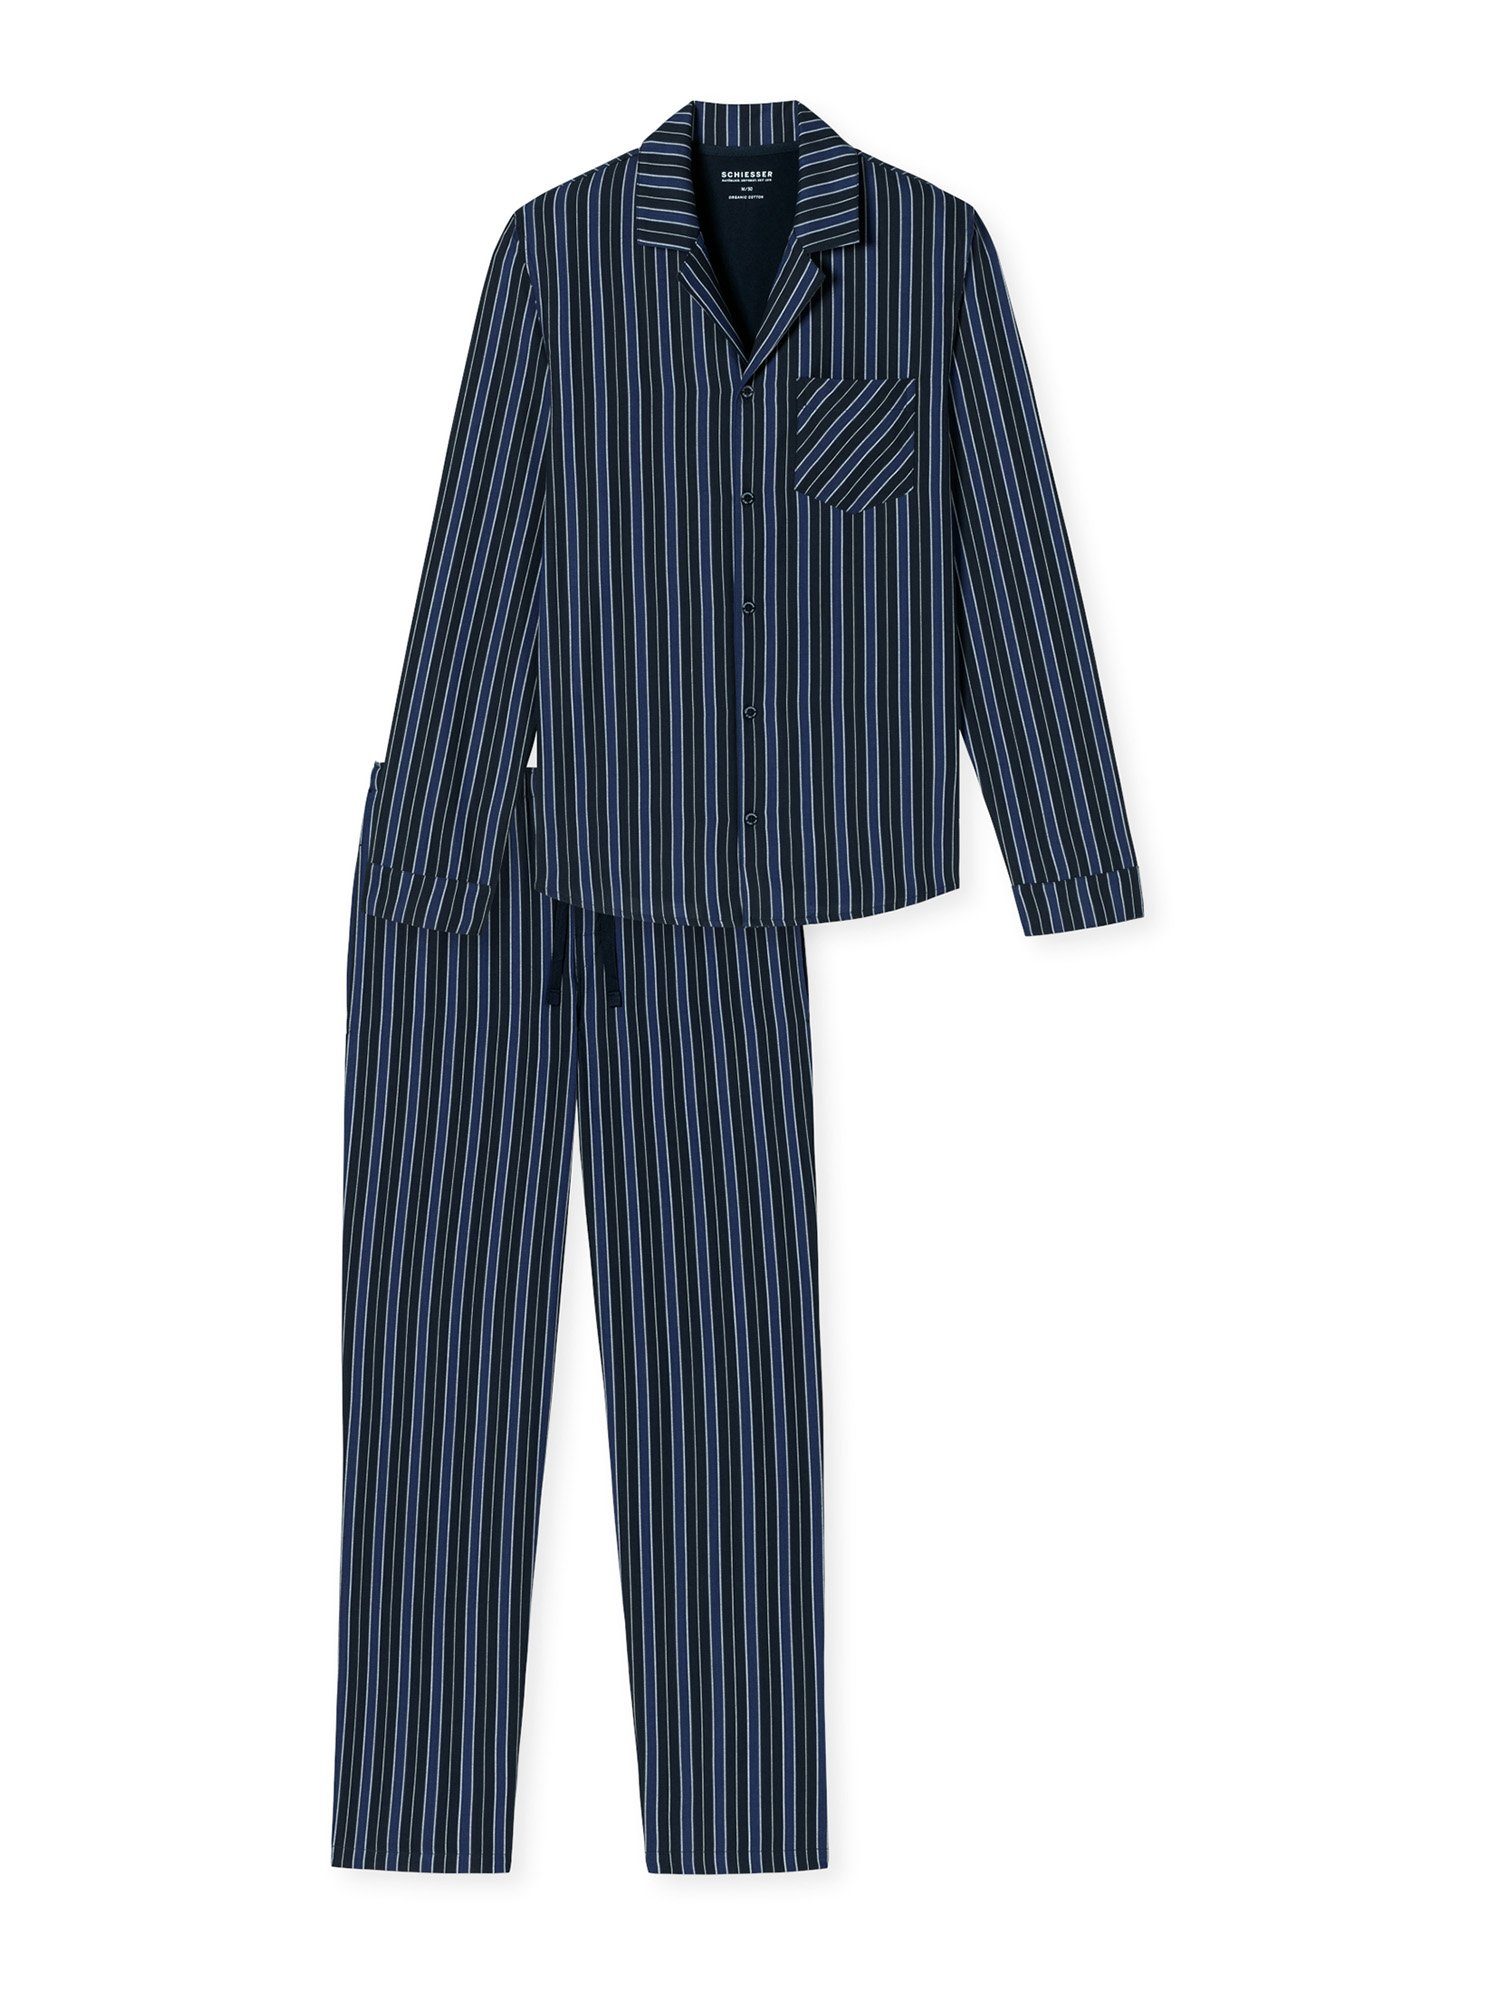 schlafanzug Pyjama Schiesser Selected schlafmode Premium pyjama